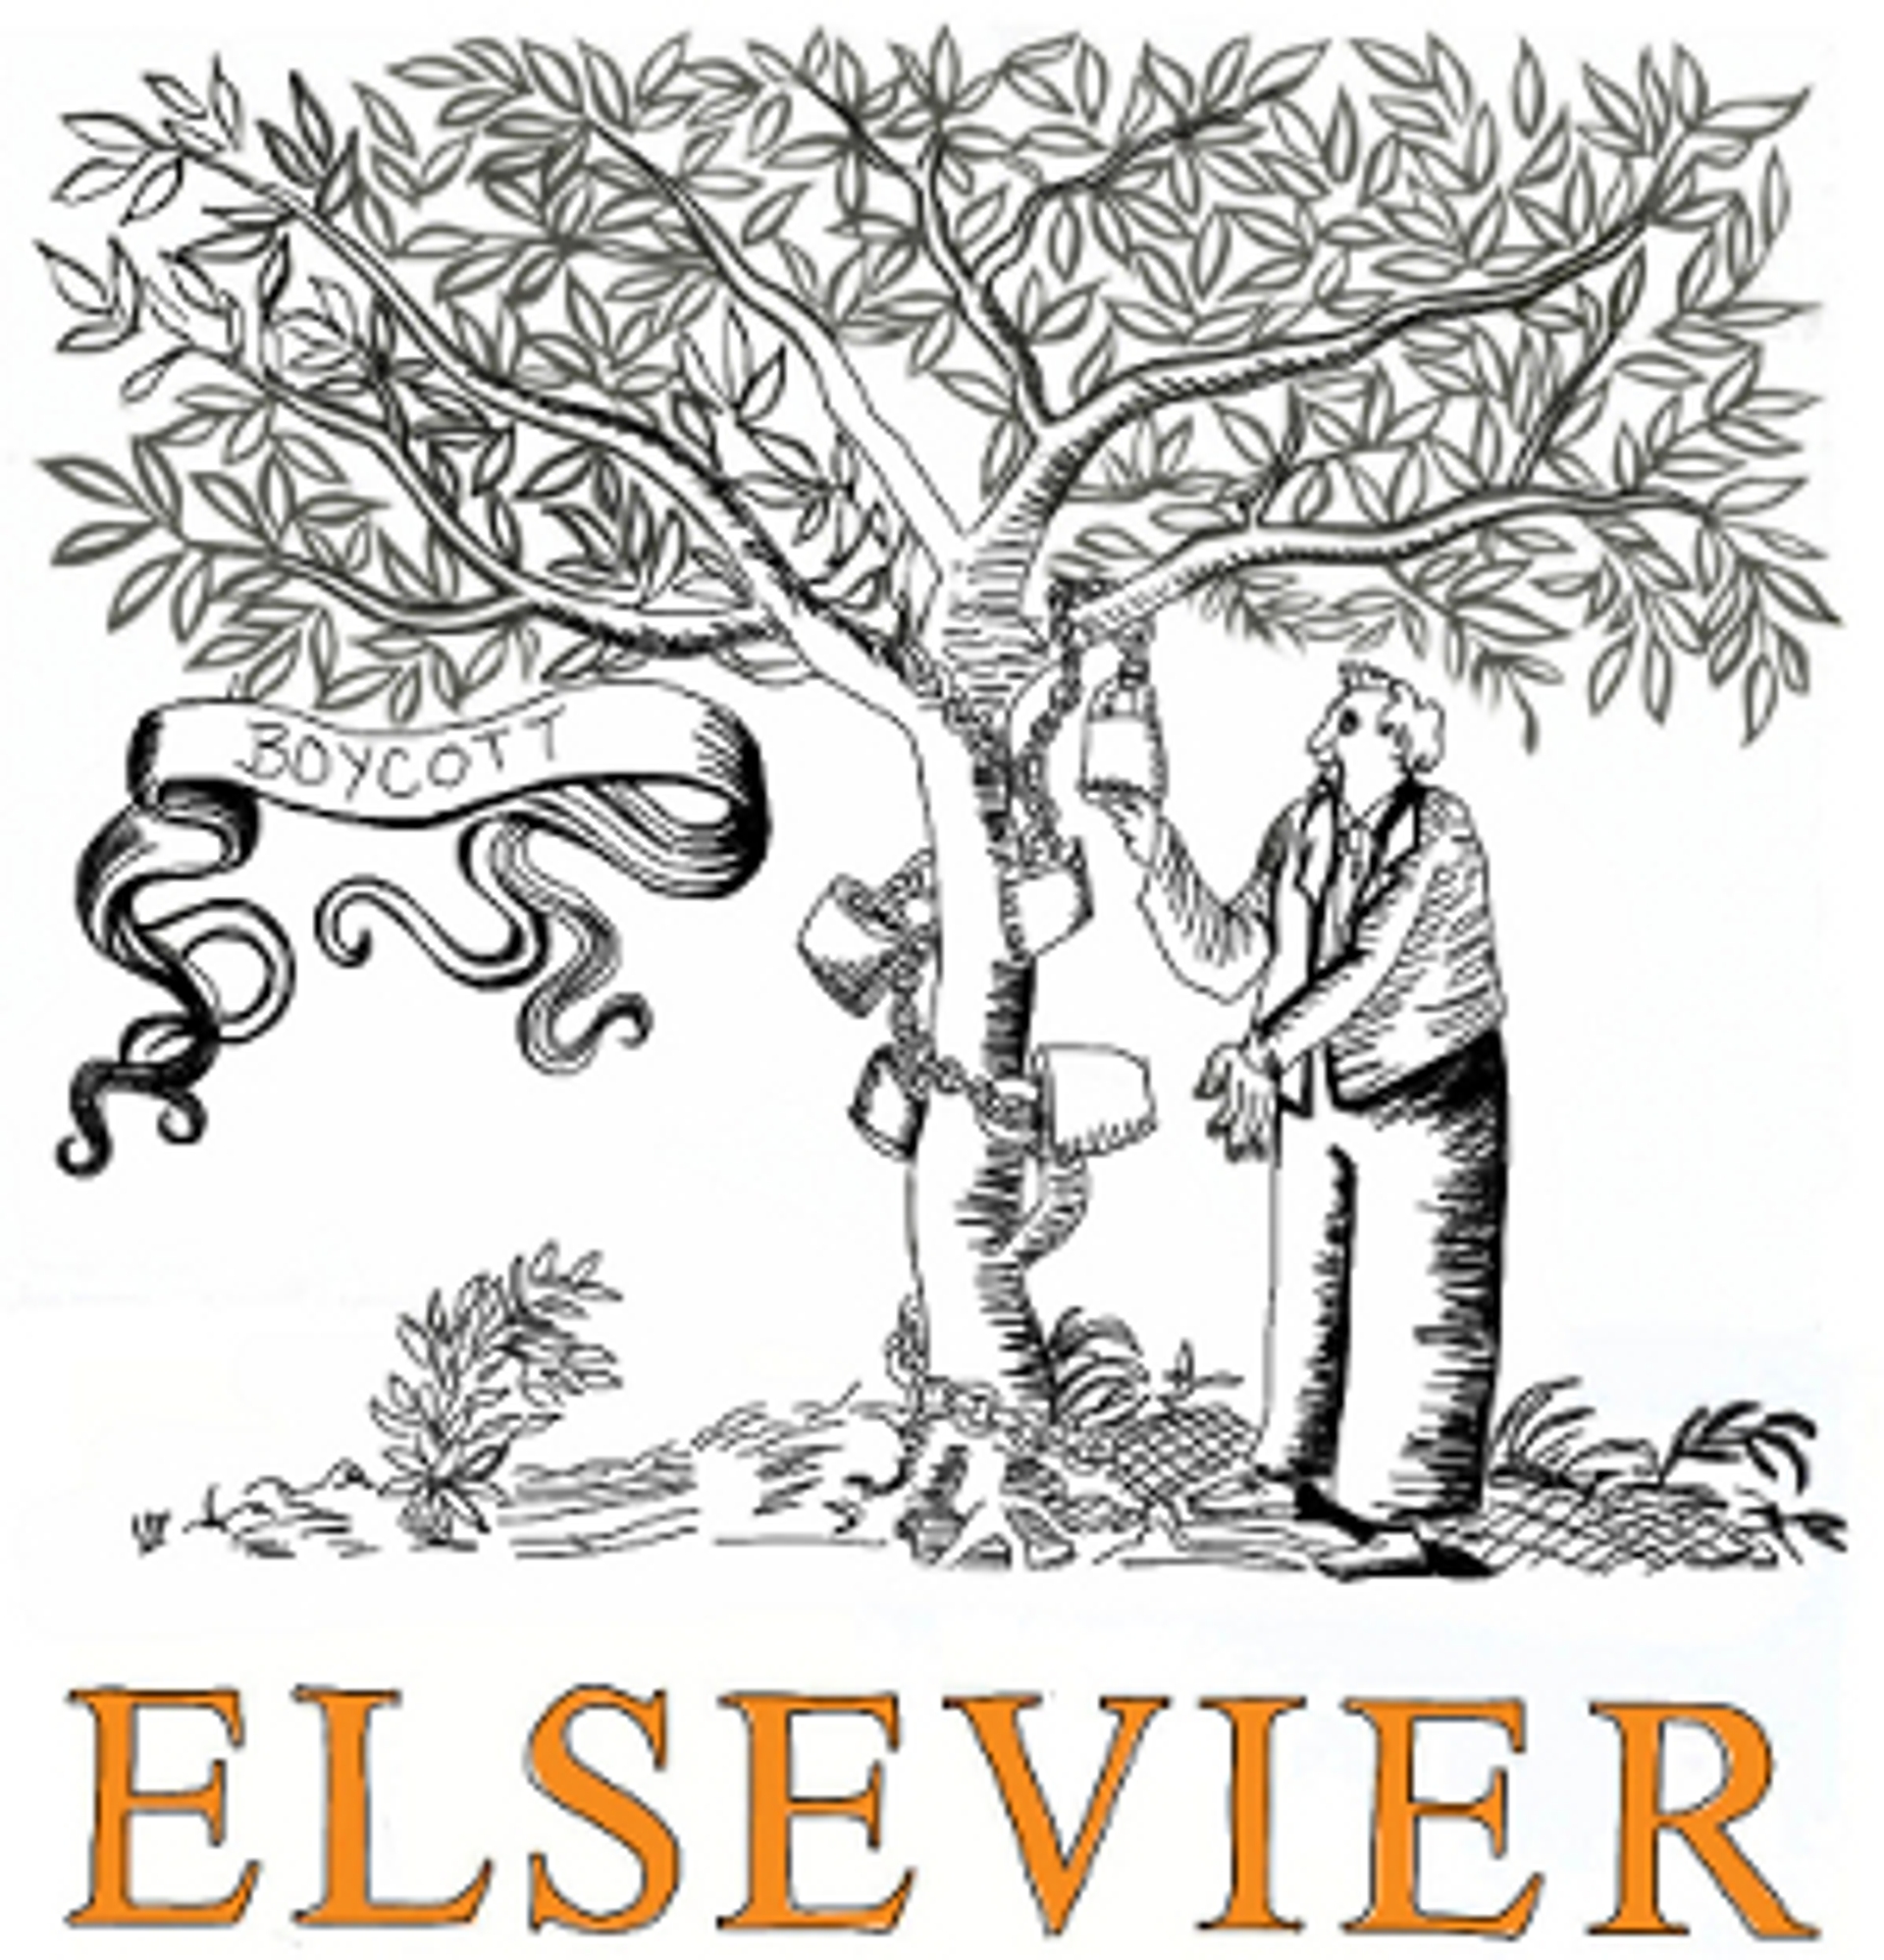 Flickr_Elsevier_boycot_GiuliaForsyth_312